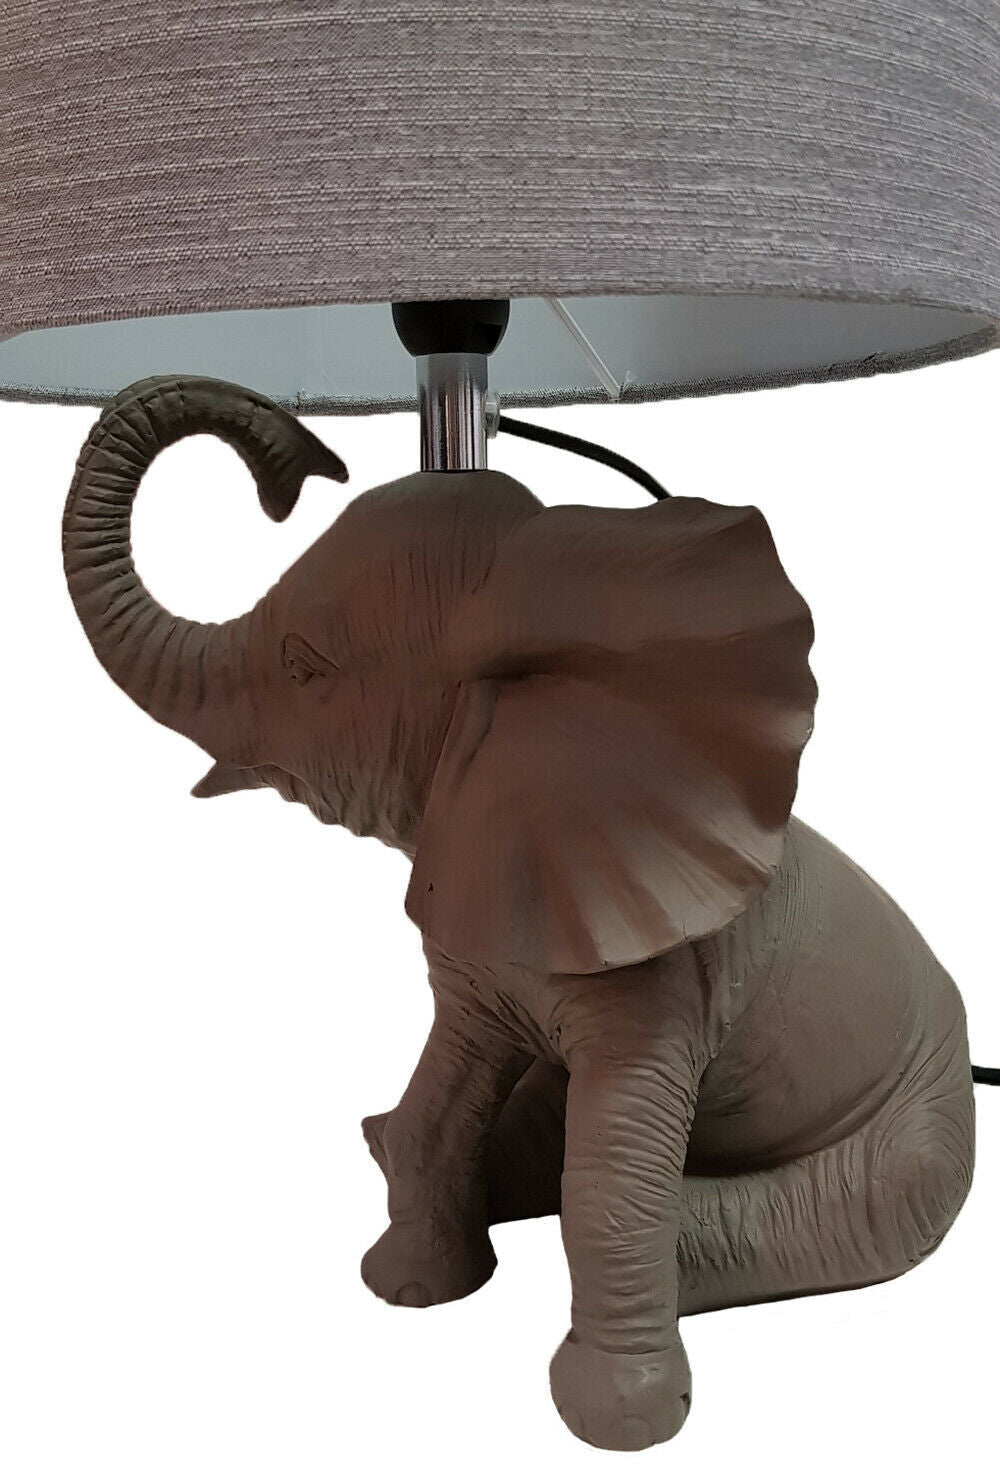 Elephant Table Lamp - Floral Fawna